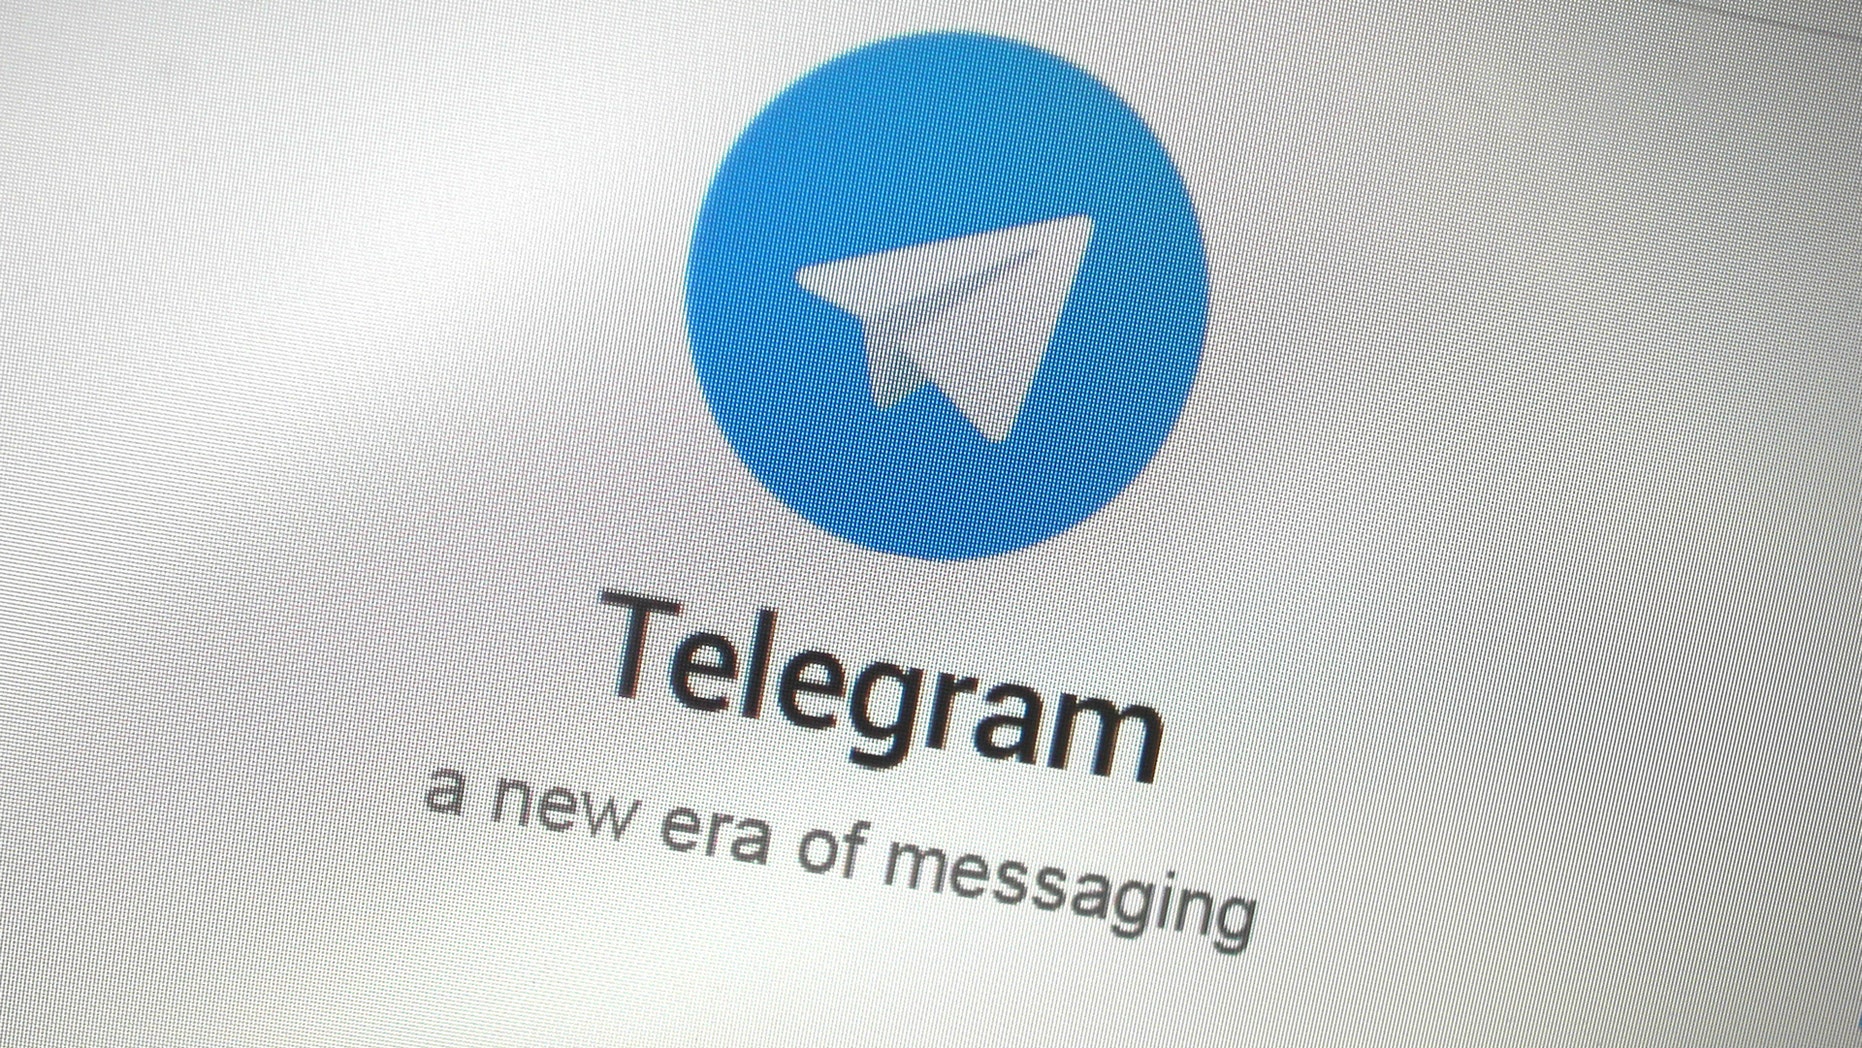 my telegram app